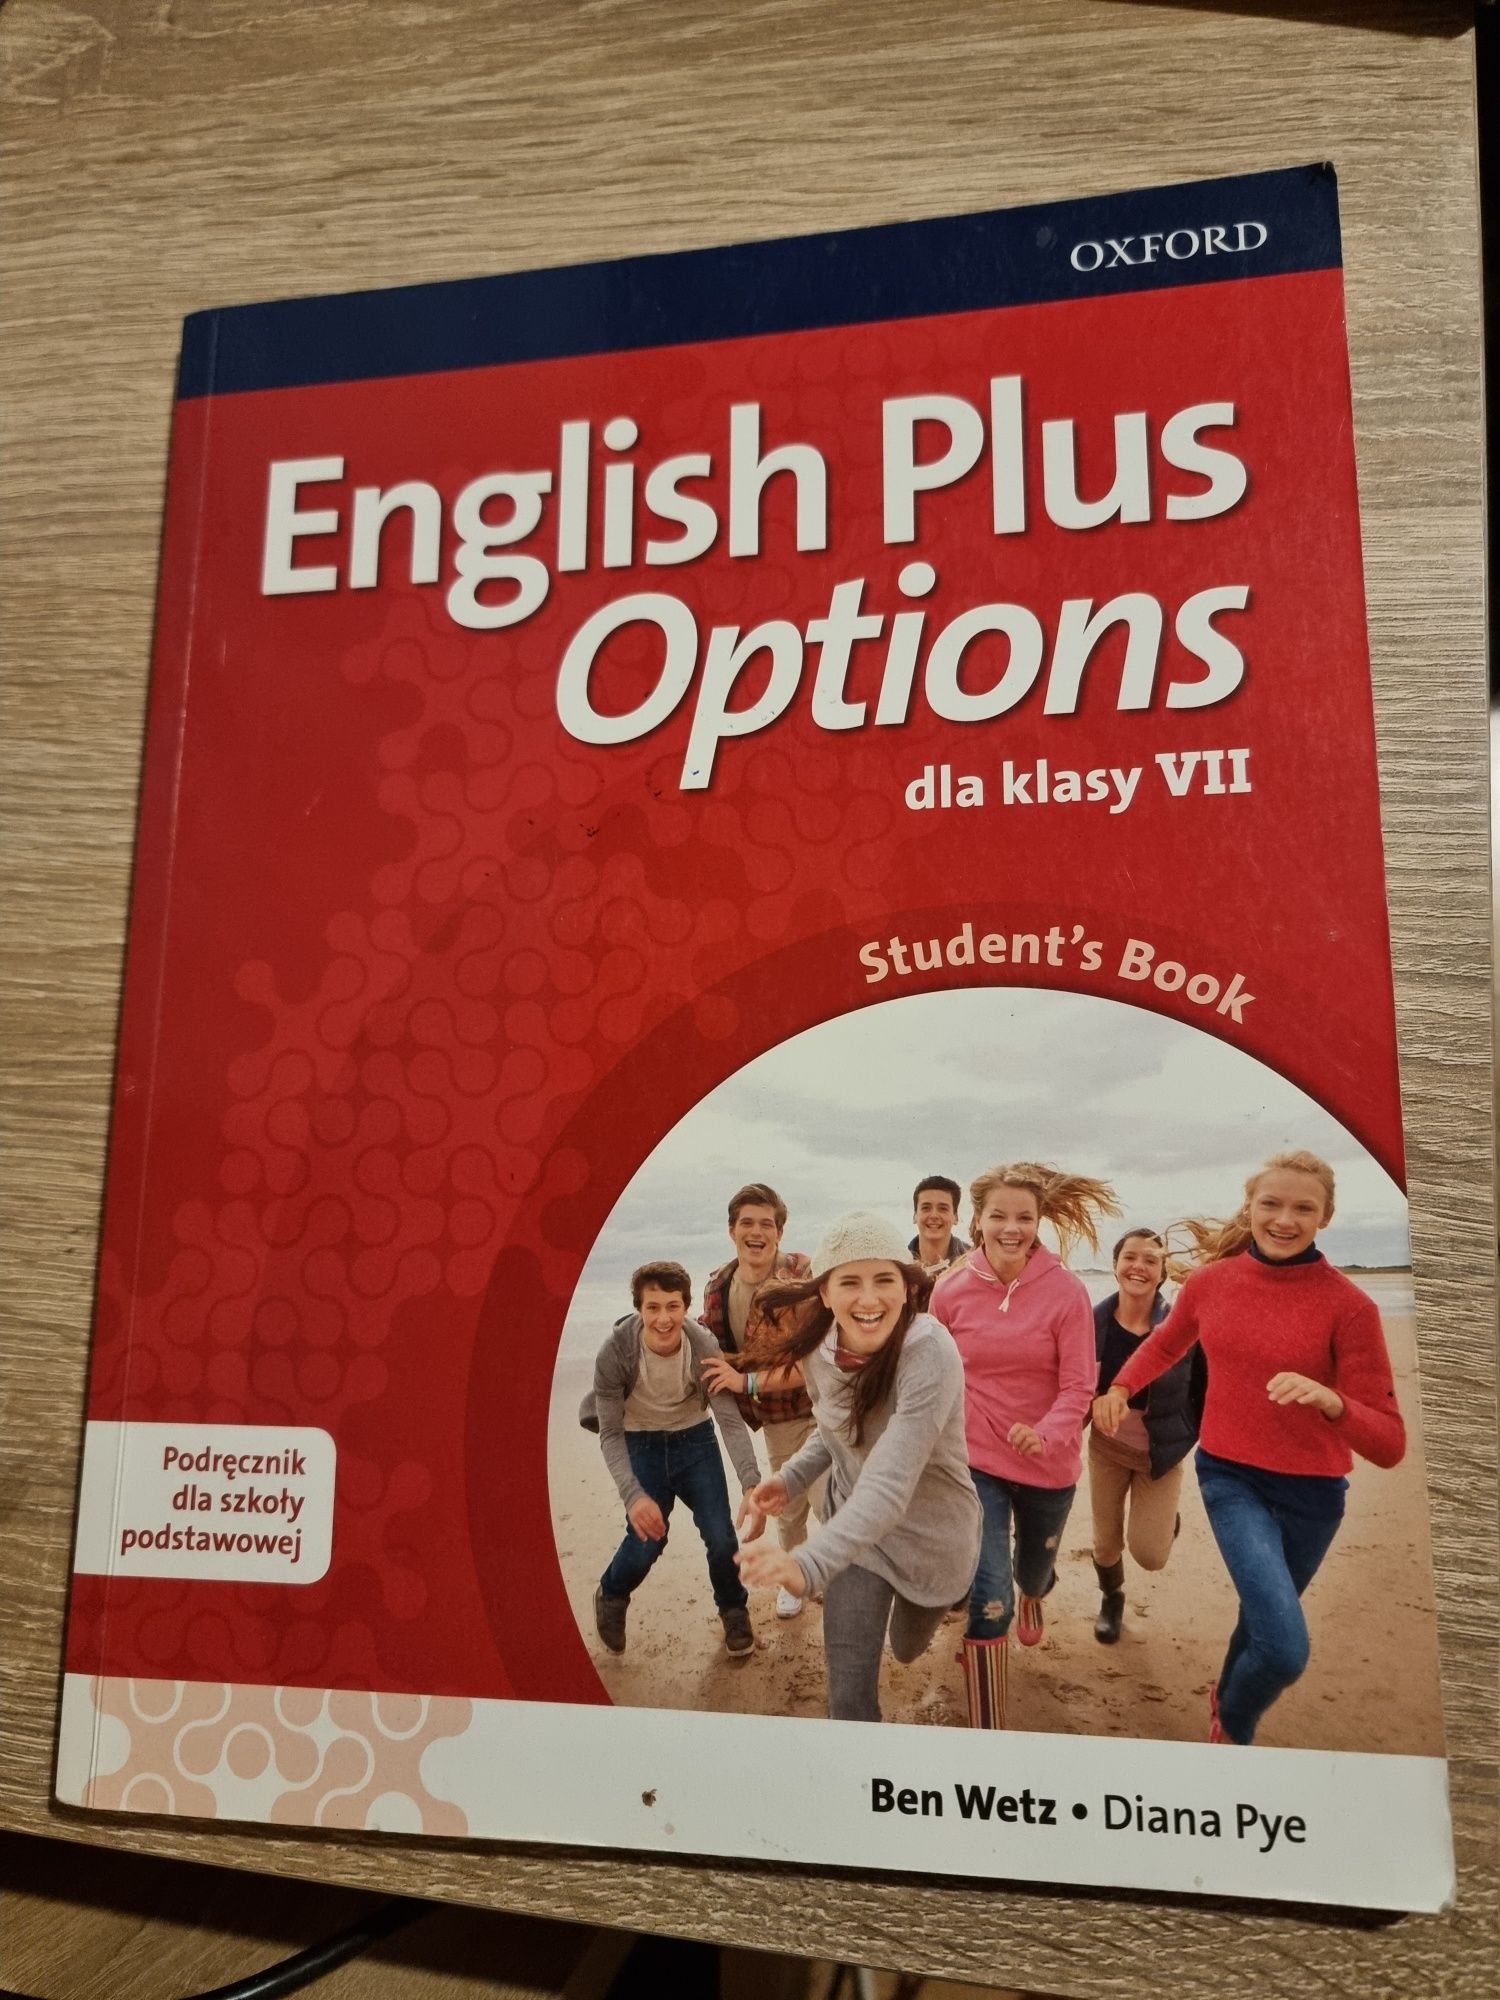 English Plus Options dla klasy 7
Oxford 
2017